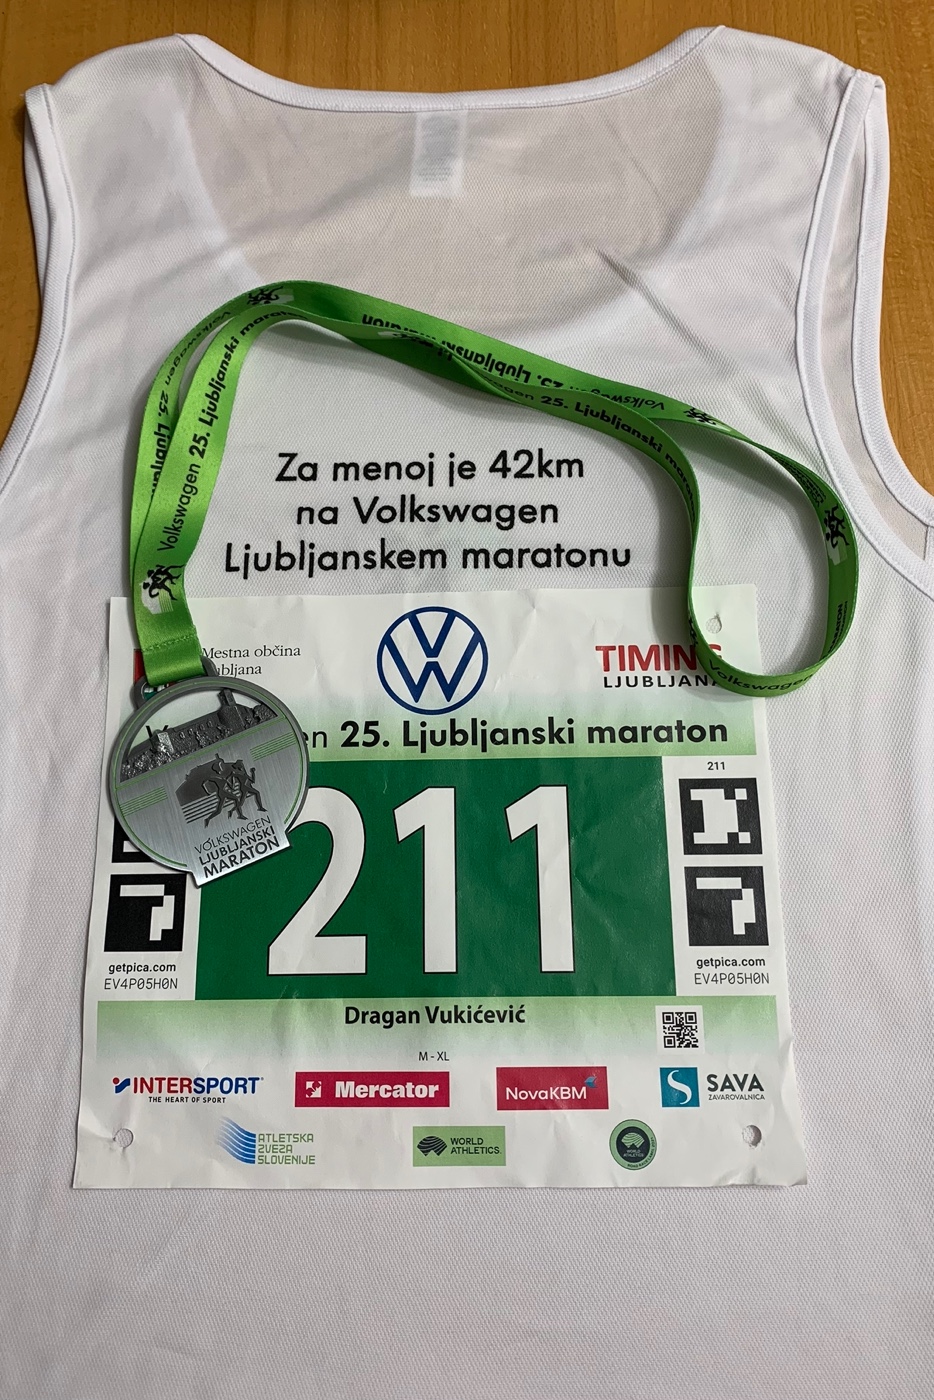 Ljubljana maraton